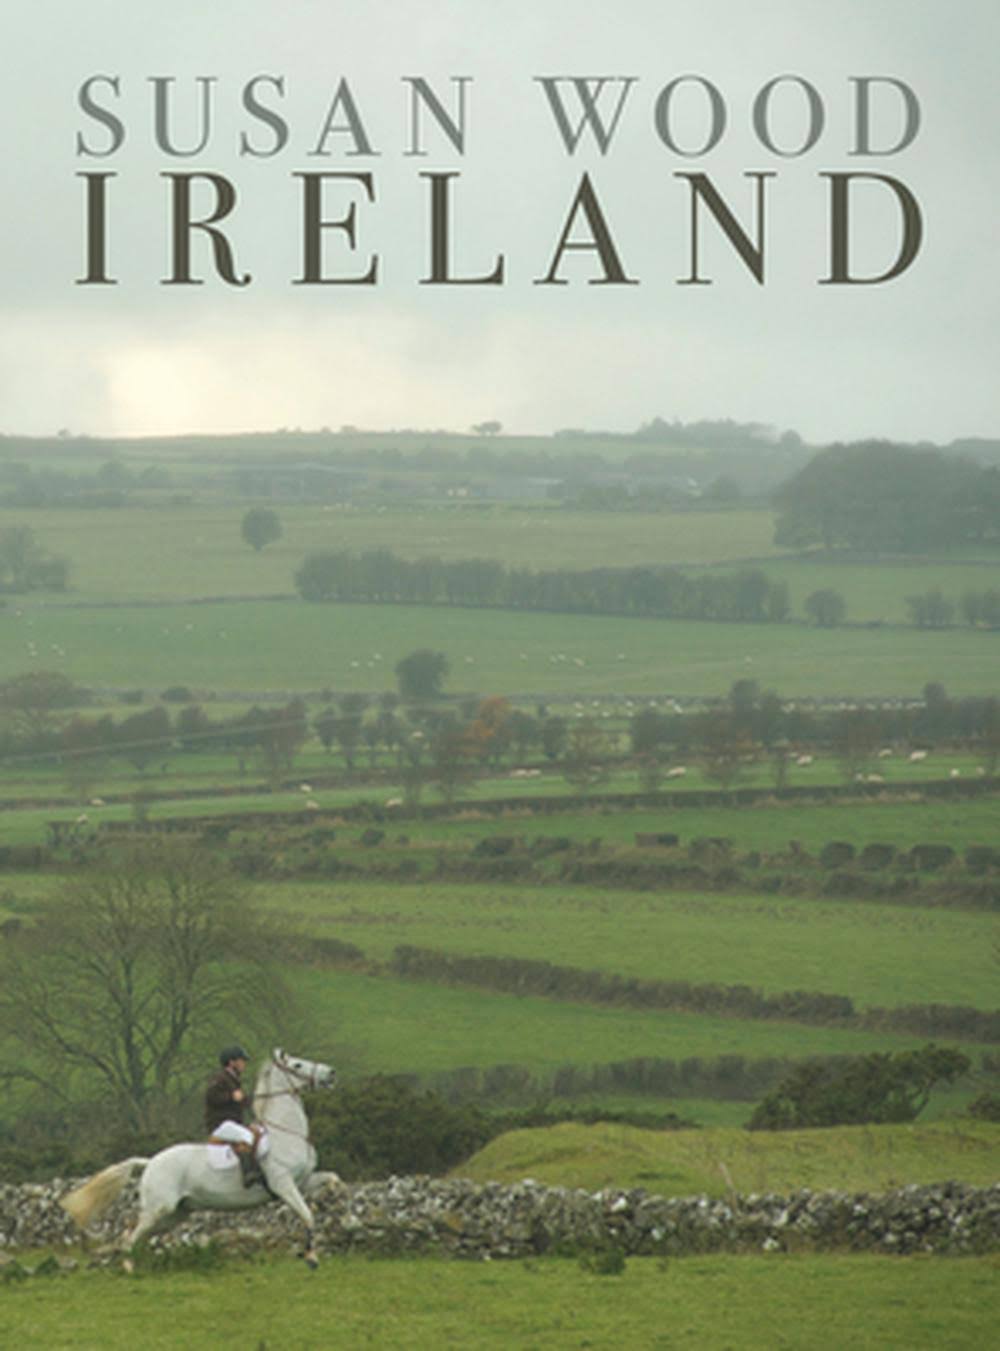 IRELAND by Susan Wood